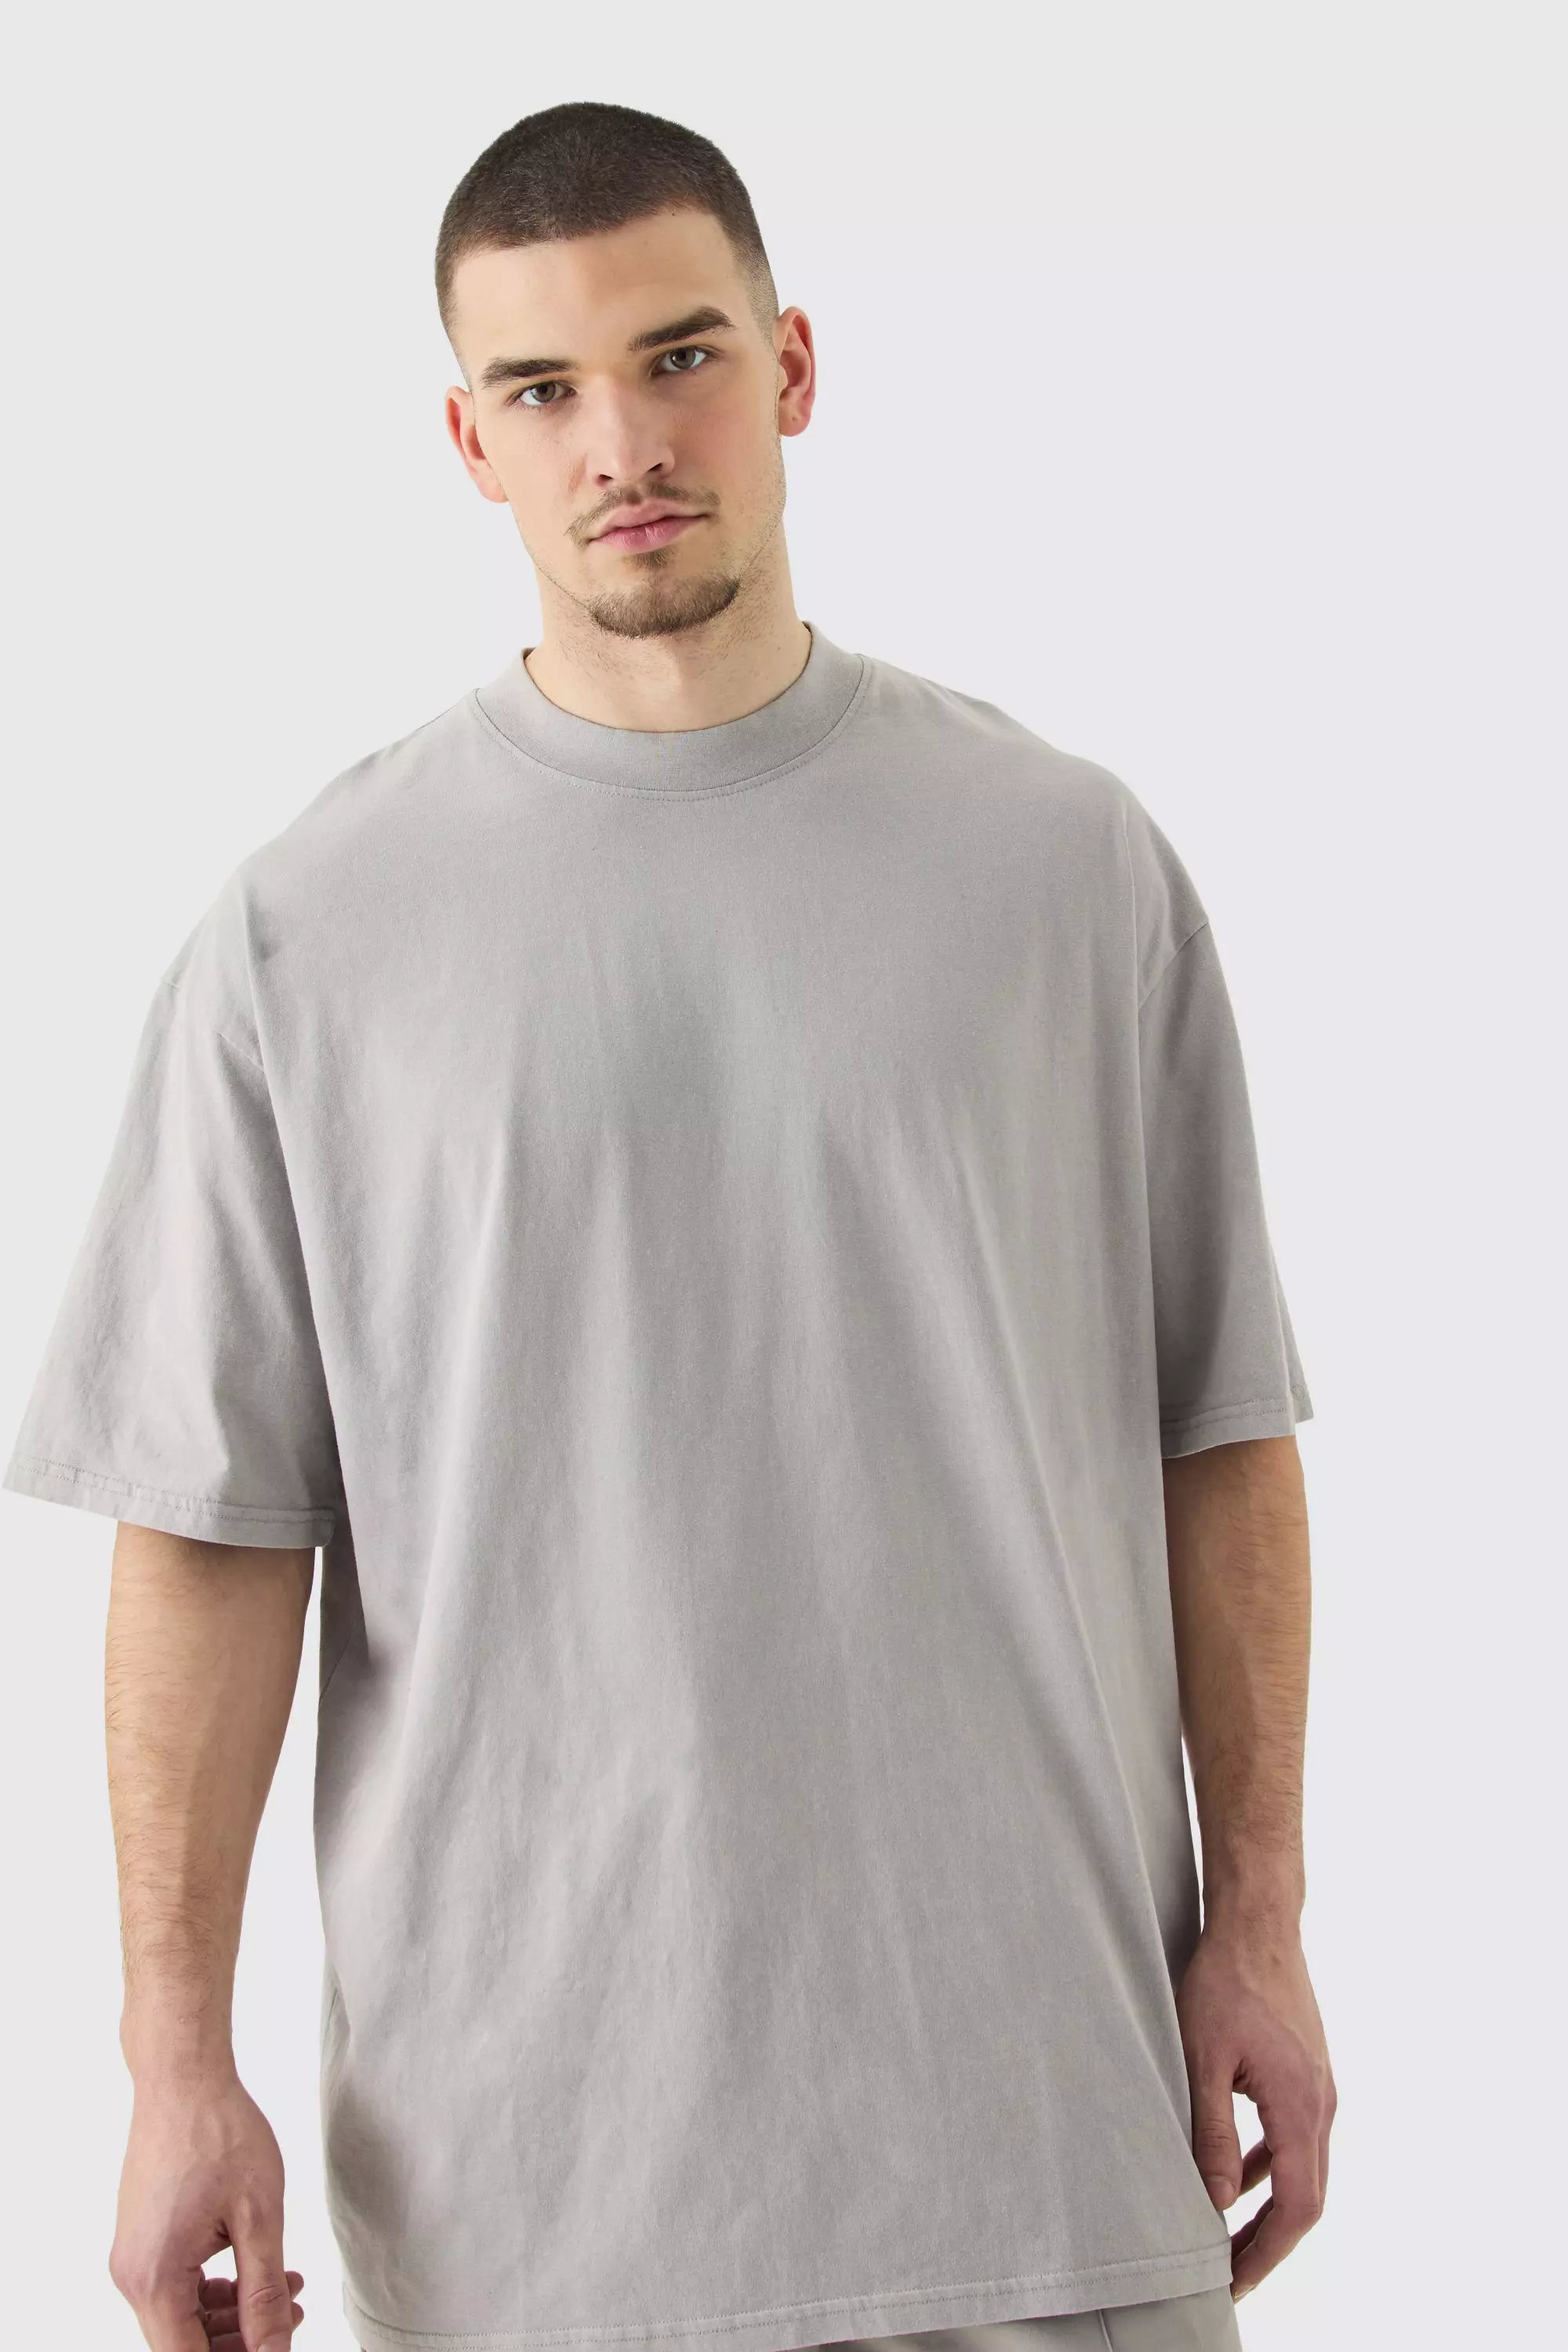 Grey Tall Oversized Acid Wash T-shirt